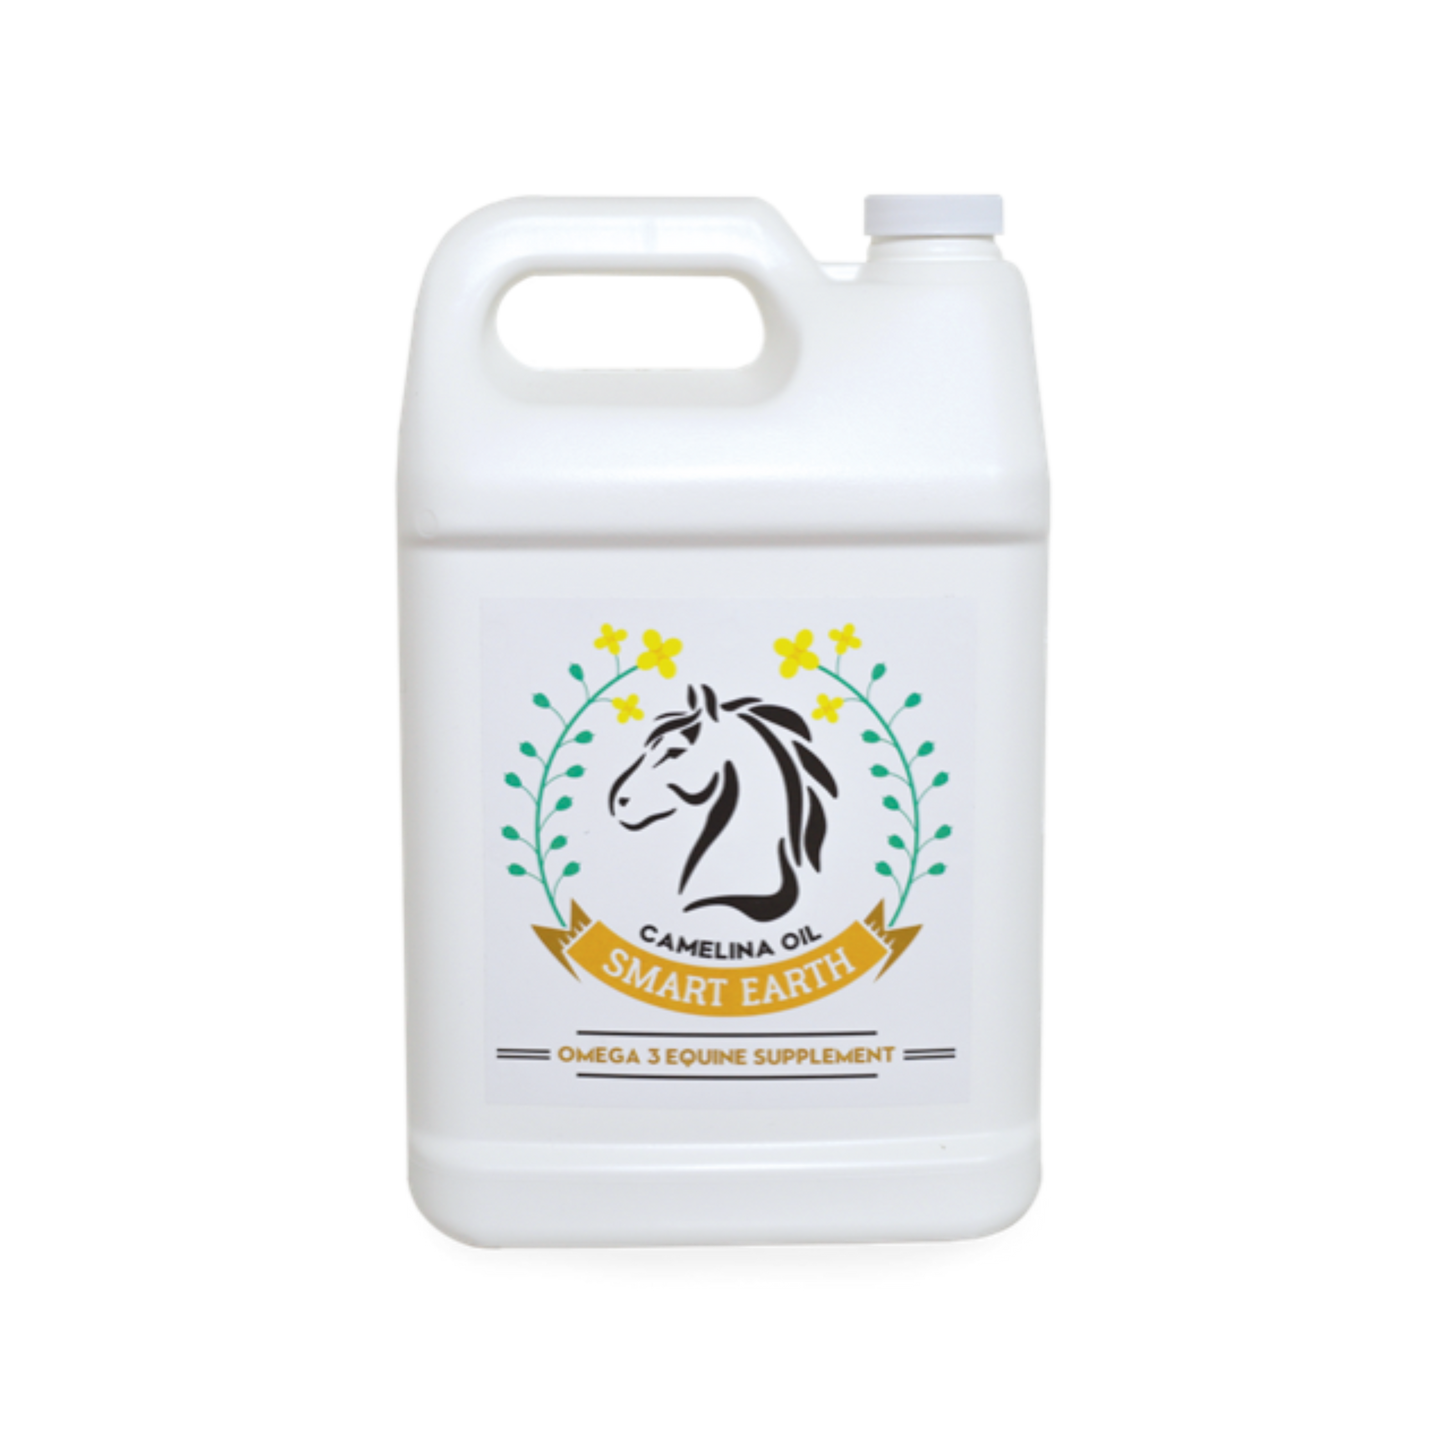 Smart Earth Elite Camelina Oil for Horses